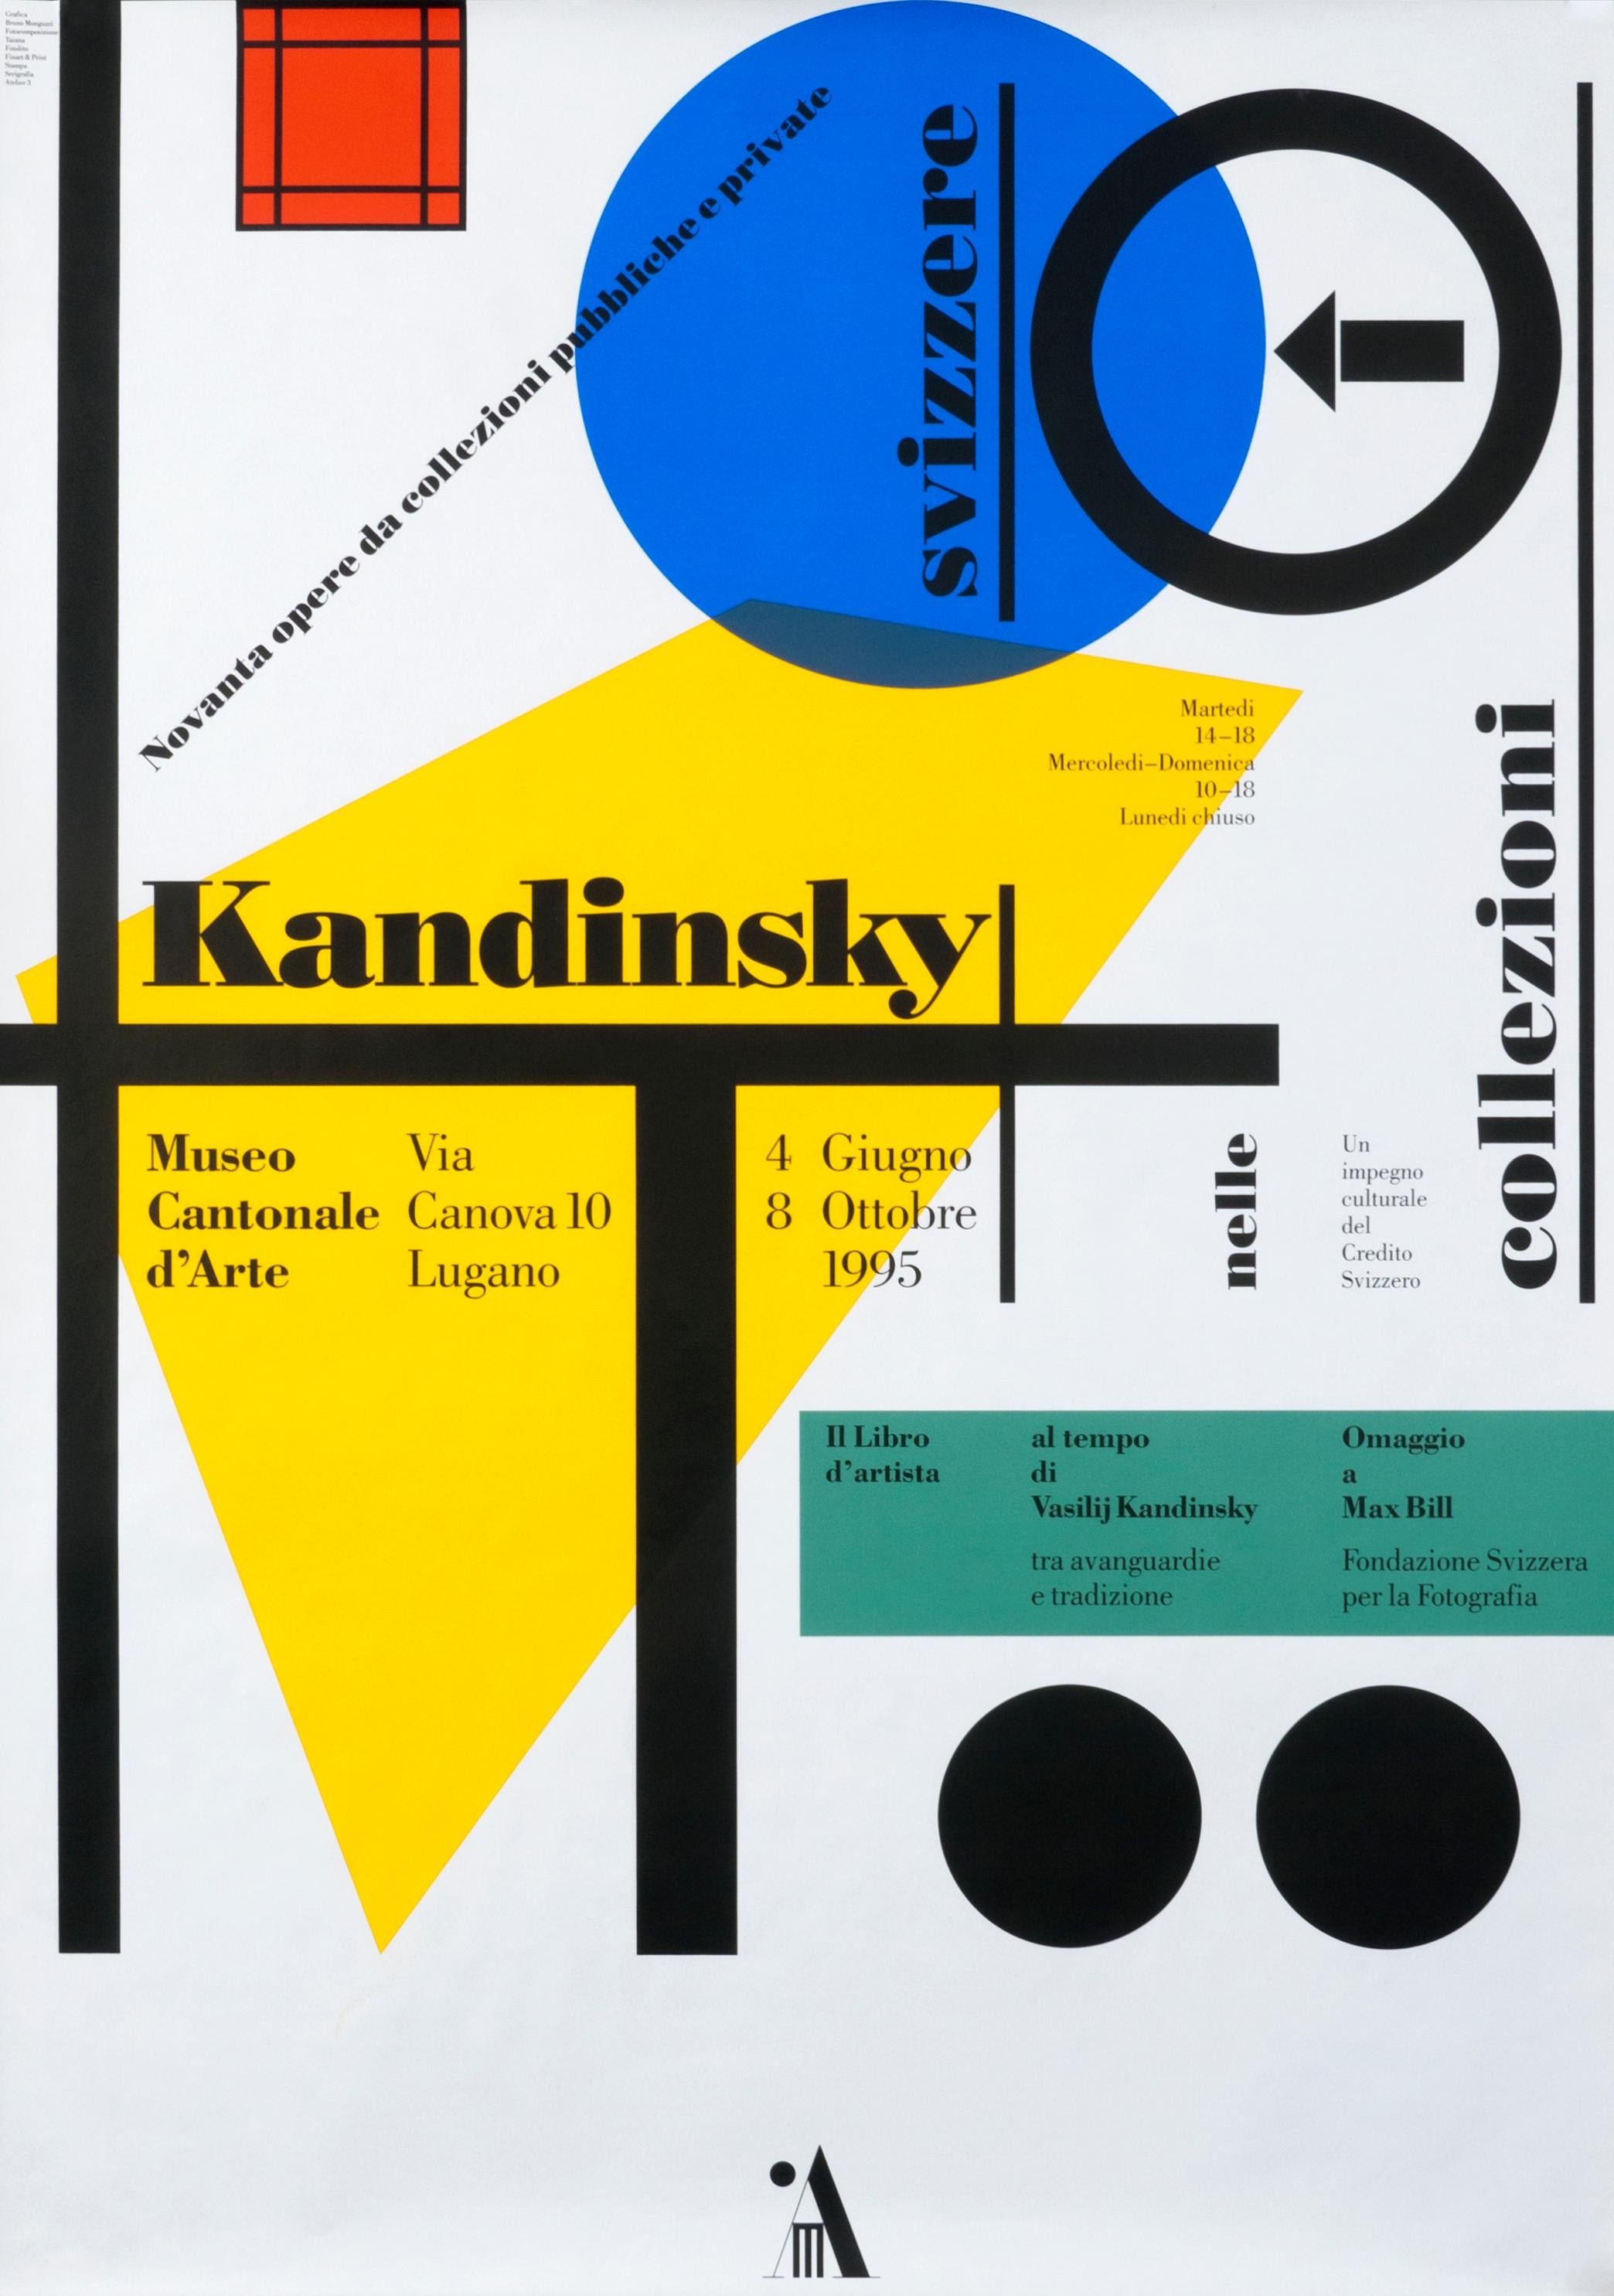 "Kandinsky - Museo Cantonale d'Arte" Original Vintage Art Exhibition Poster - Print by Bruno Monguzzi